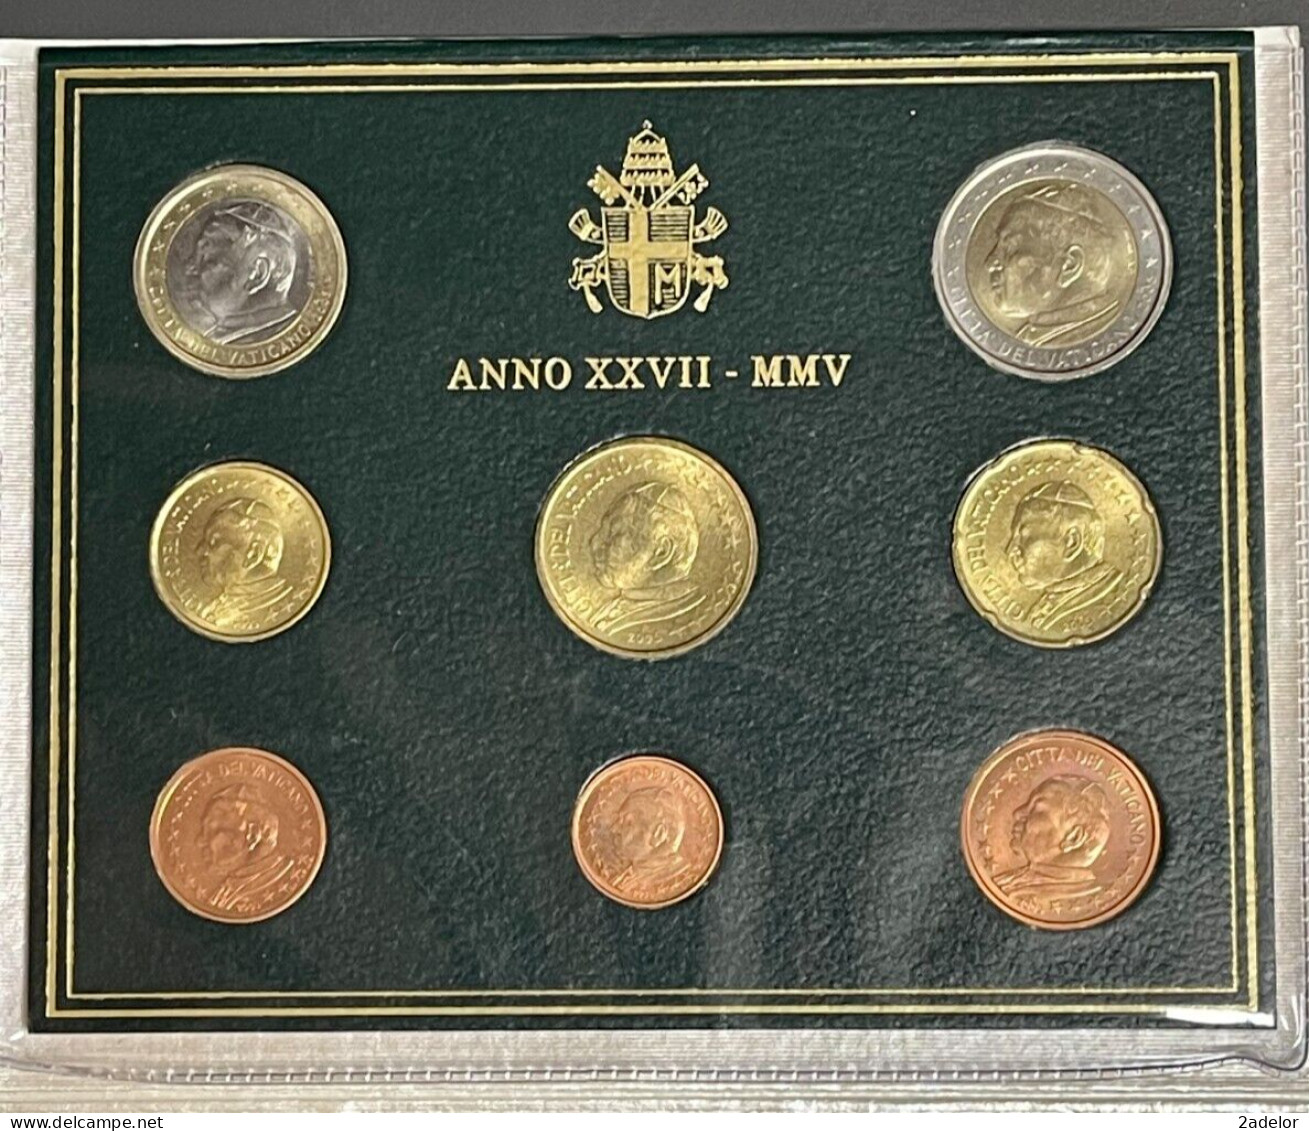 Coffret BU Euros Commémoratif VATICAN 2005, Pontificat De Jean-Paul II - Vatican